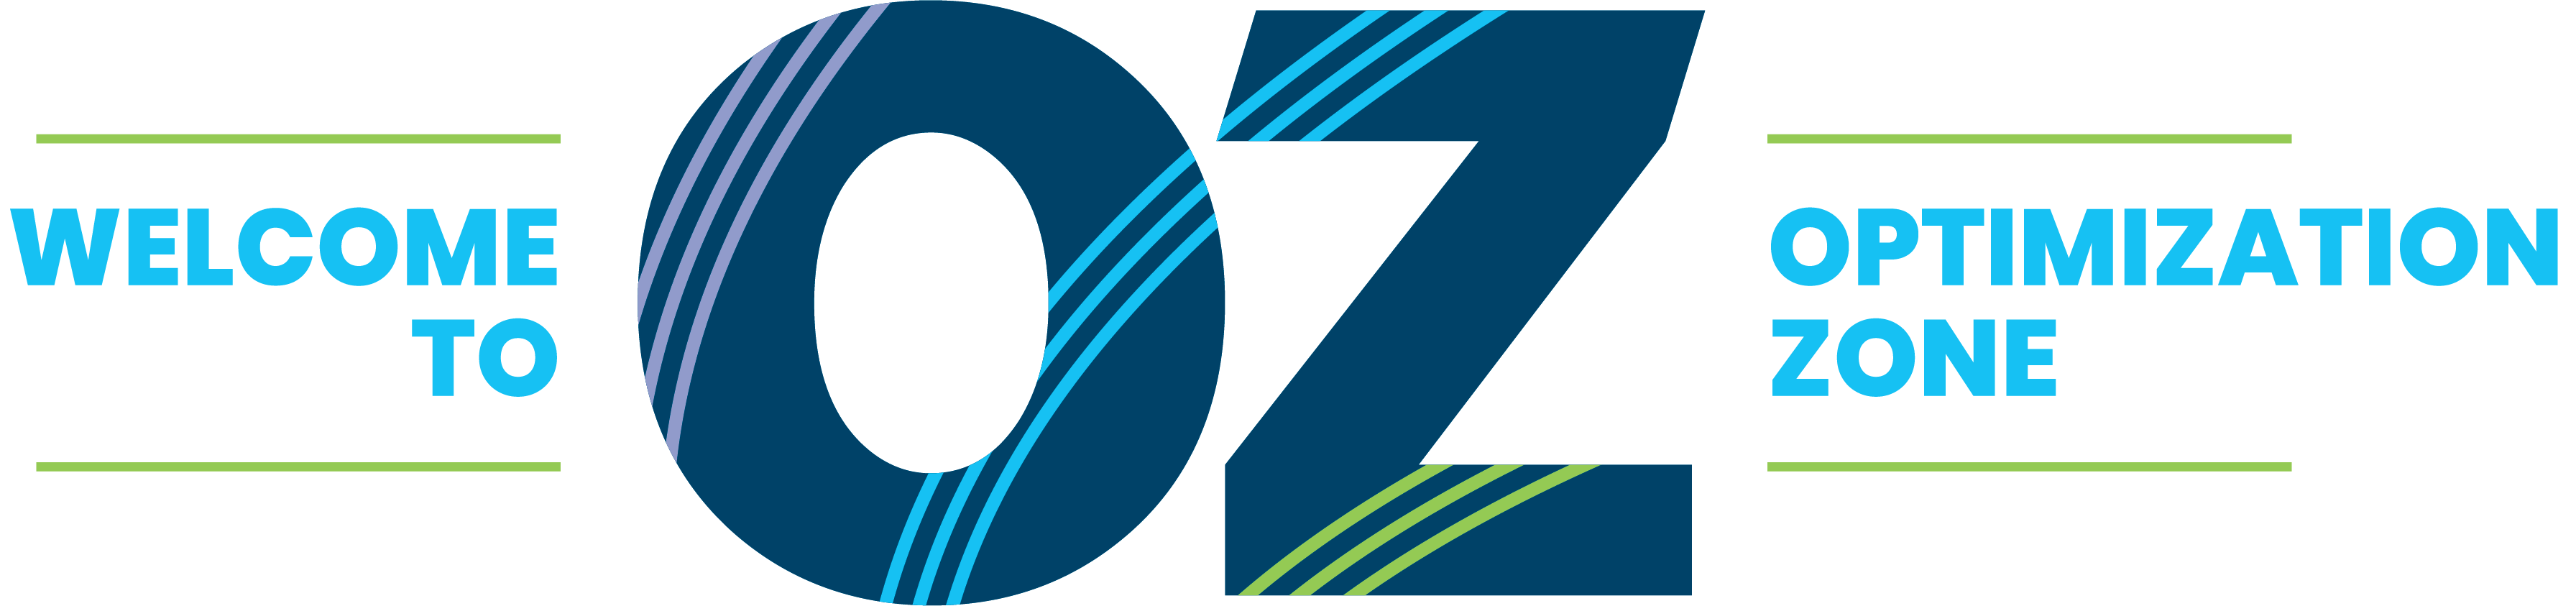 OZ - Optimization Zone